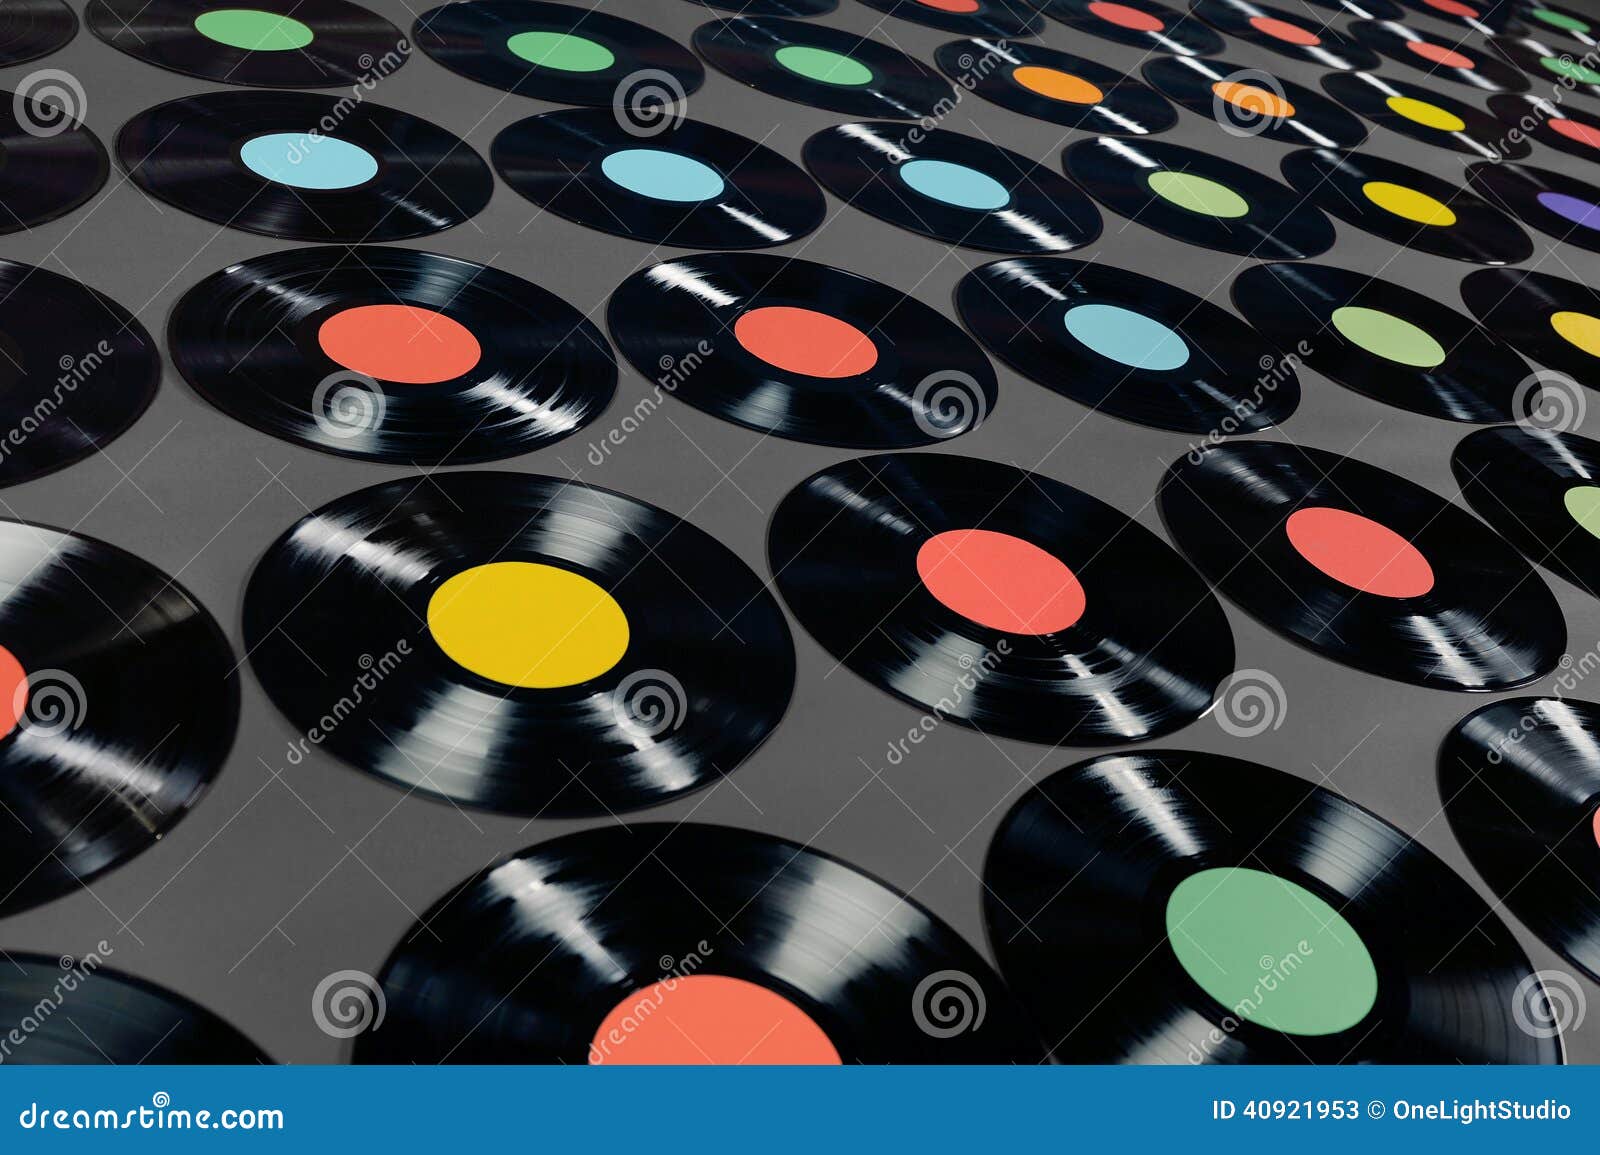 music - vinyl records